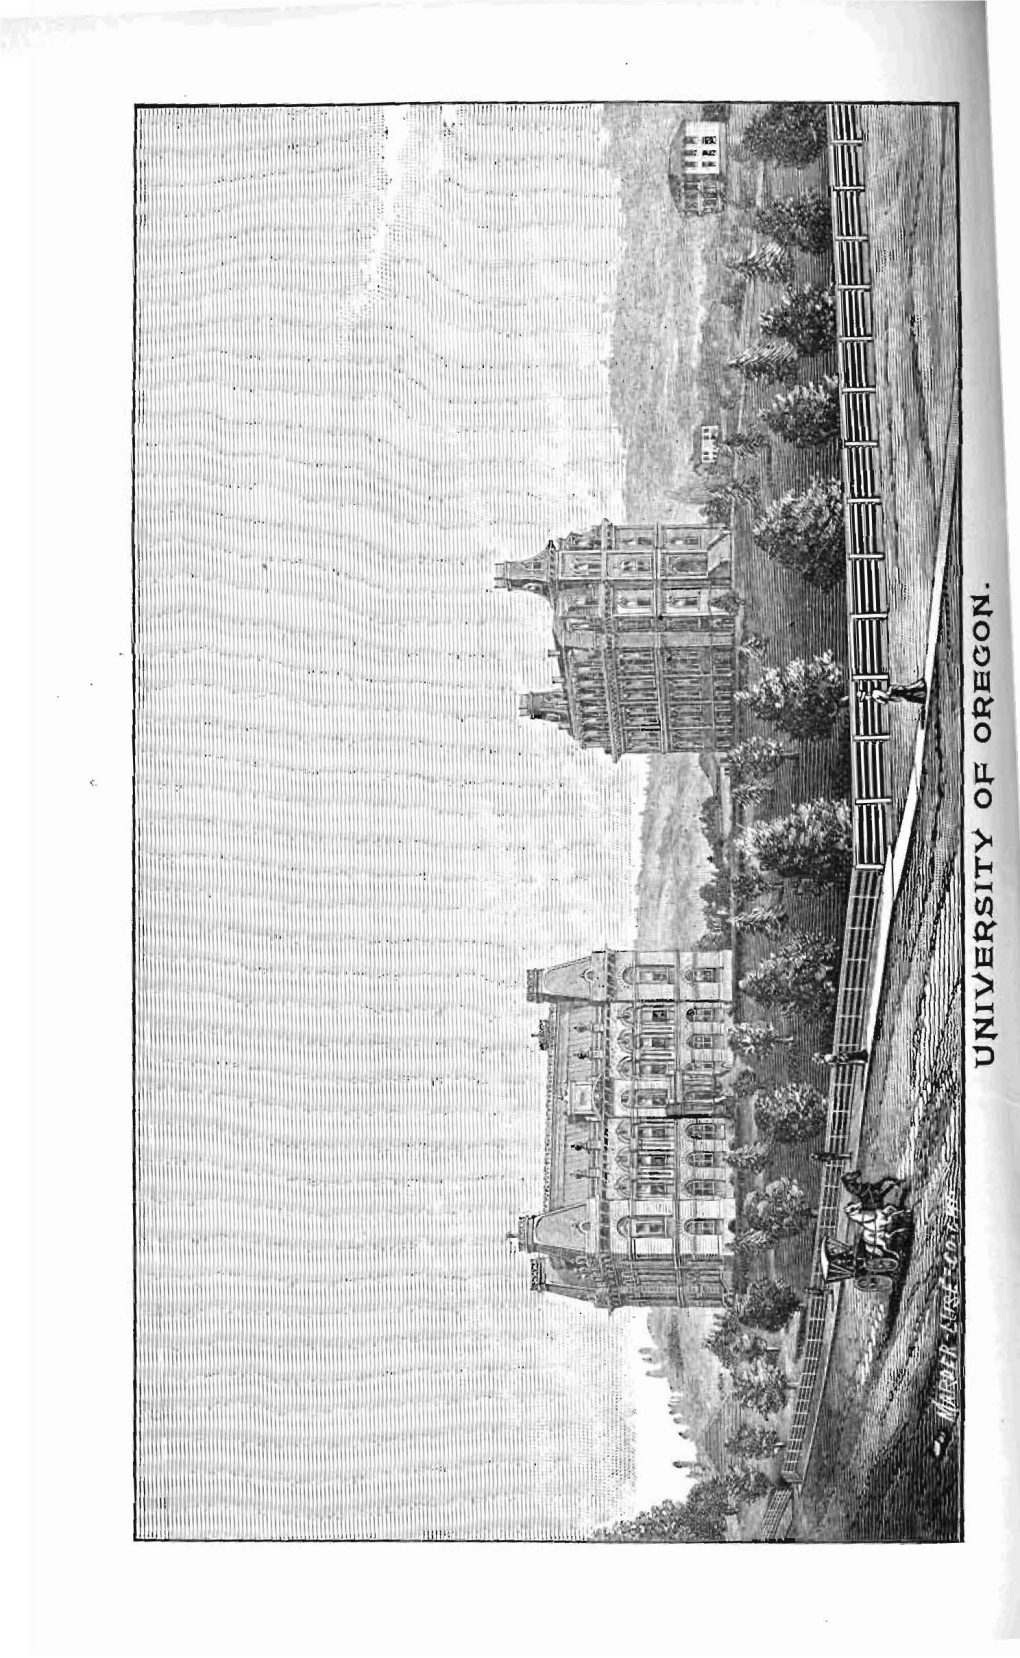 View / Open UOCAT 1889-1890.Pdf